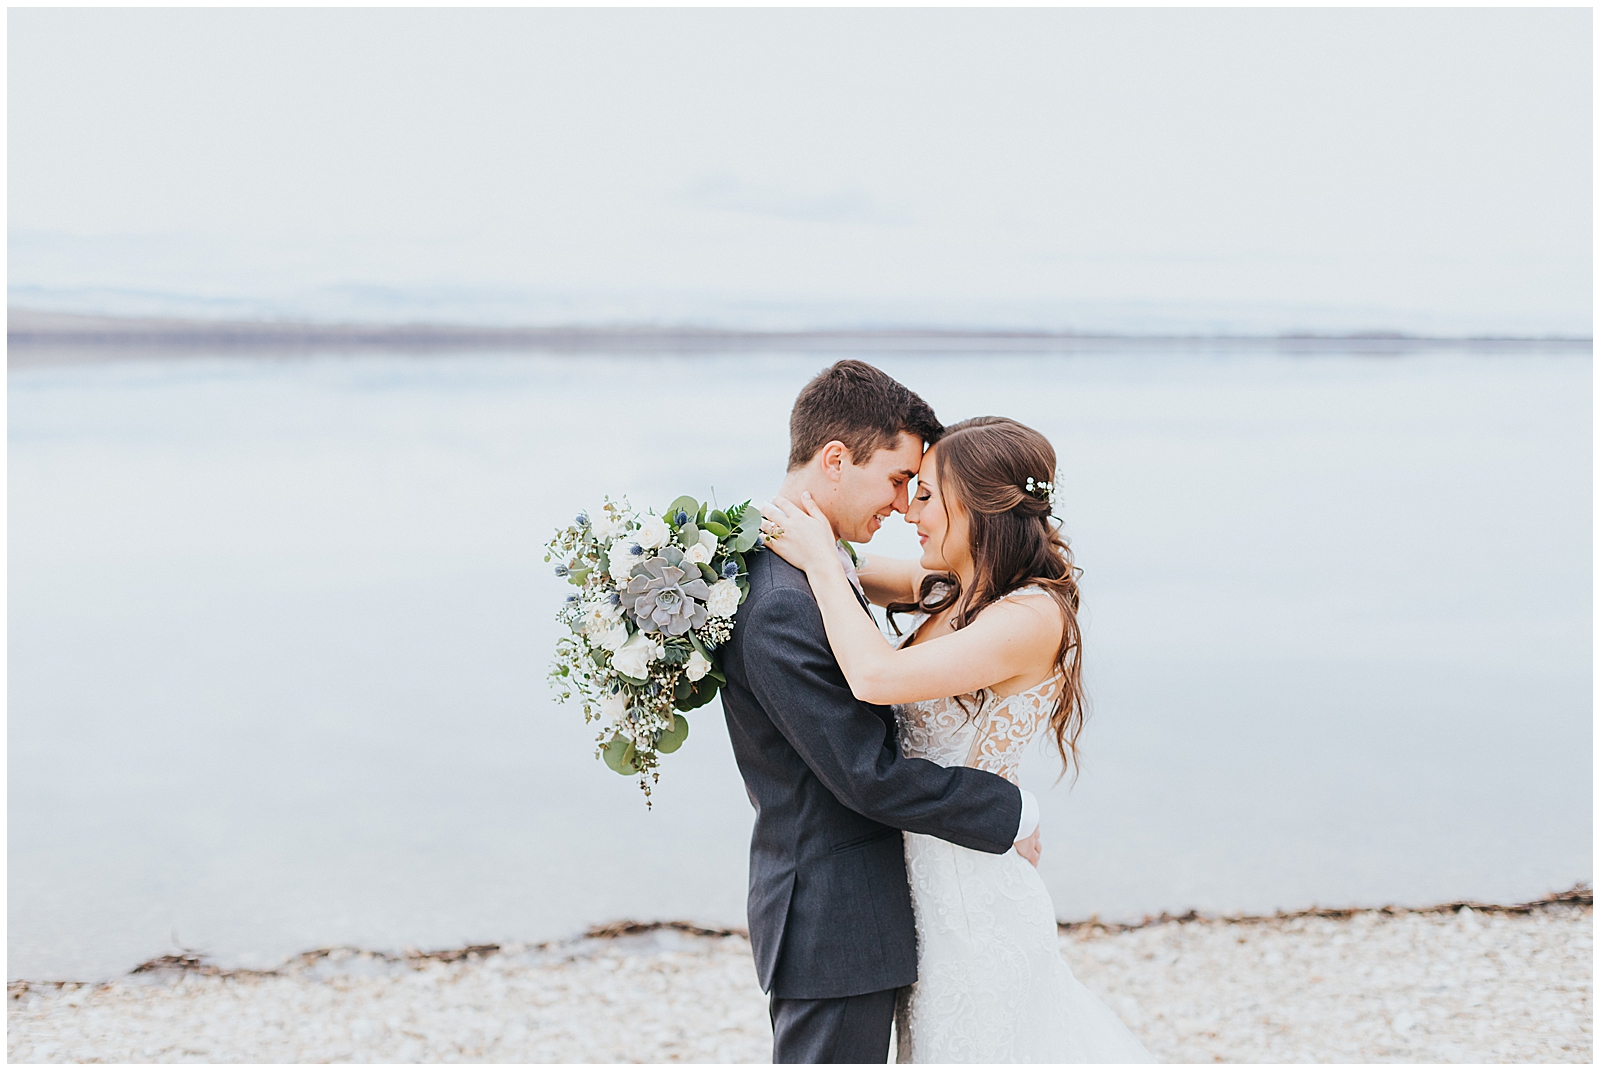 Dusty Blue and Blush Idaho Lake Wedding by Karli Elliott Photography